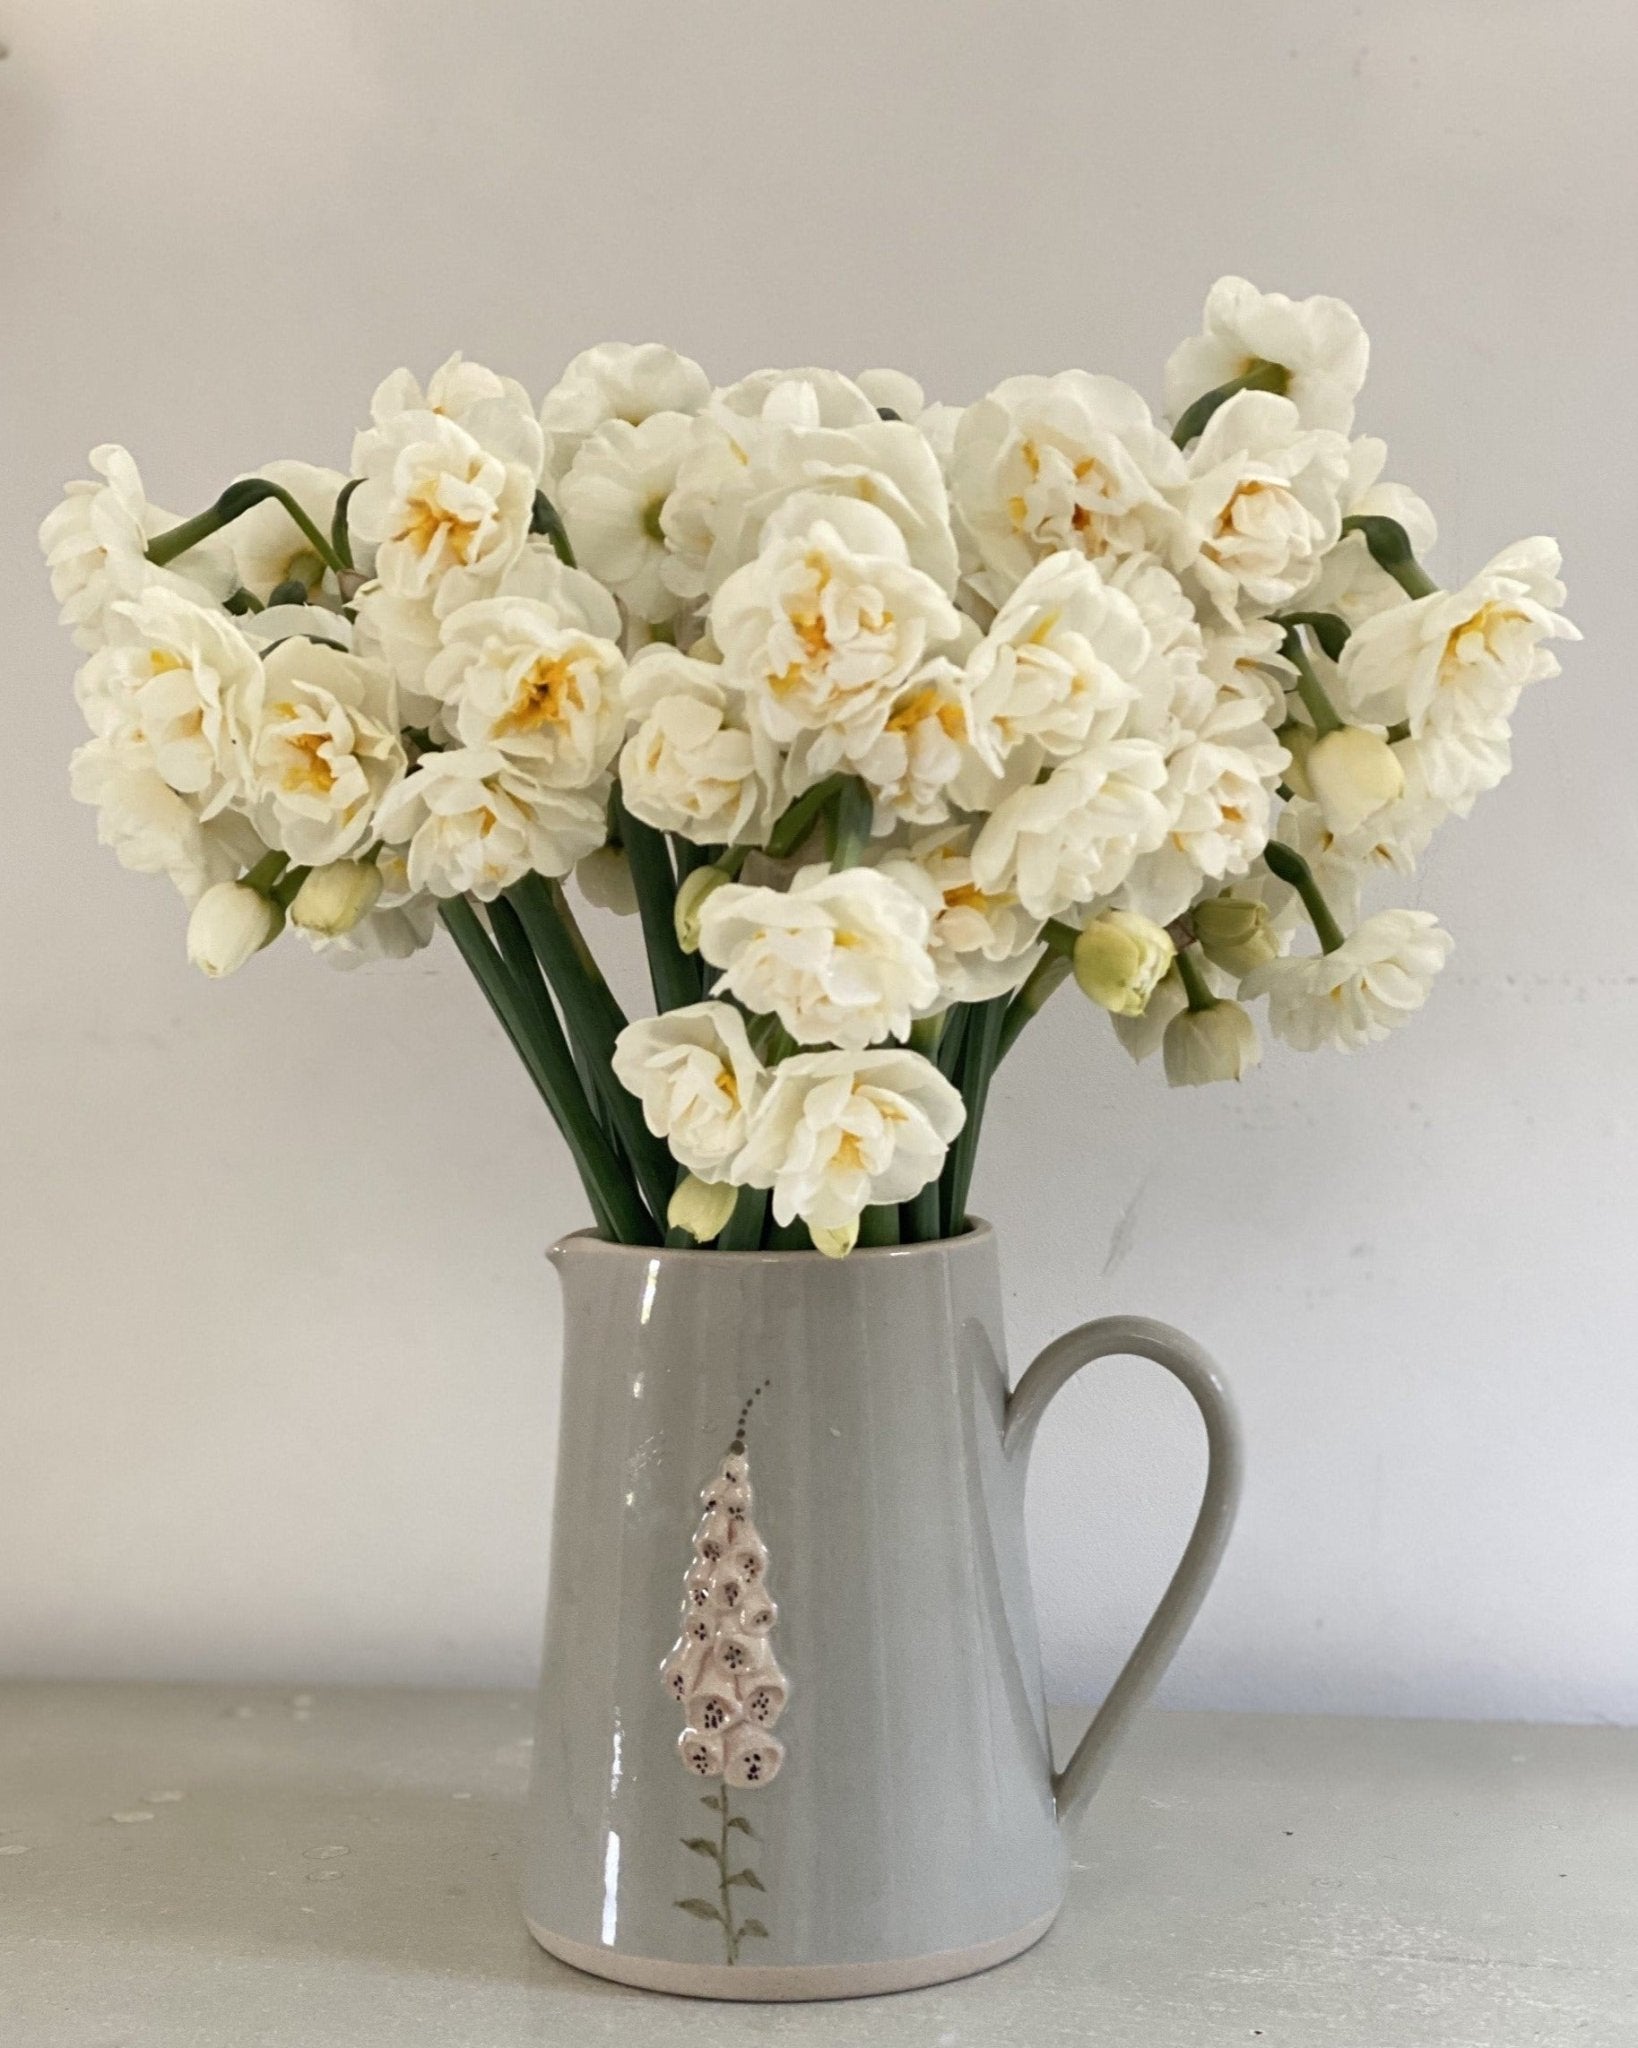 Narcissus Bridal Crown - pak van 10 bloembollen - Tuinkabouter Chrisje